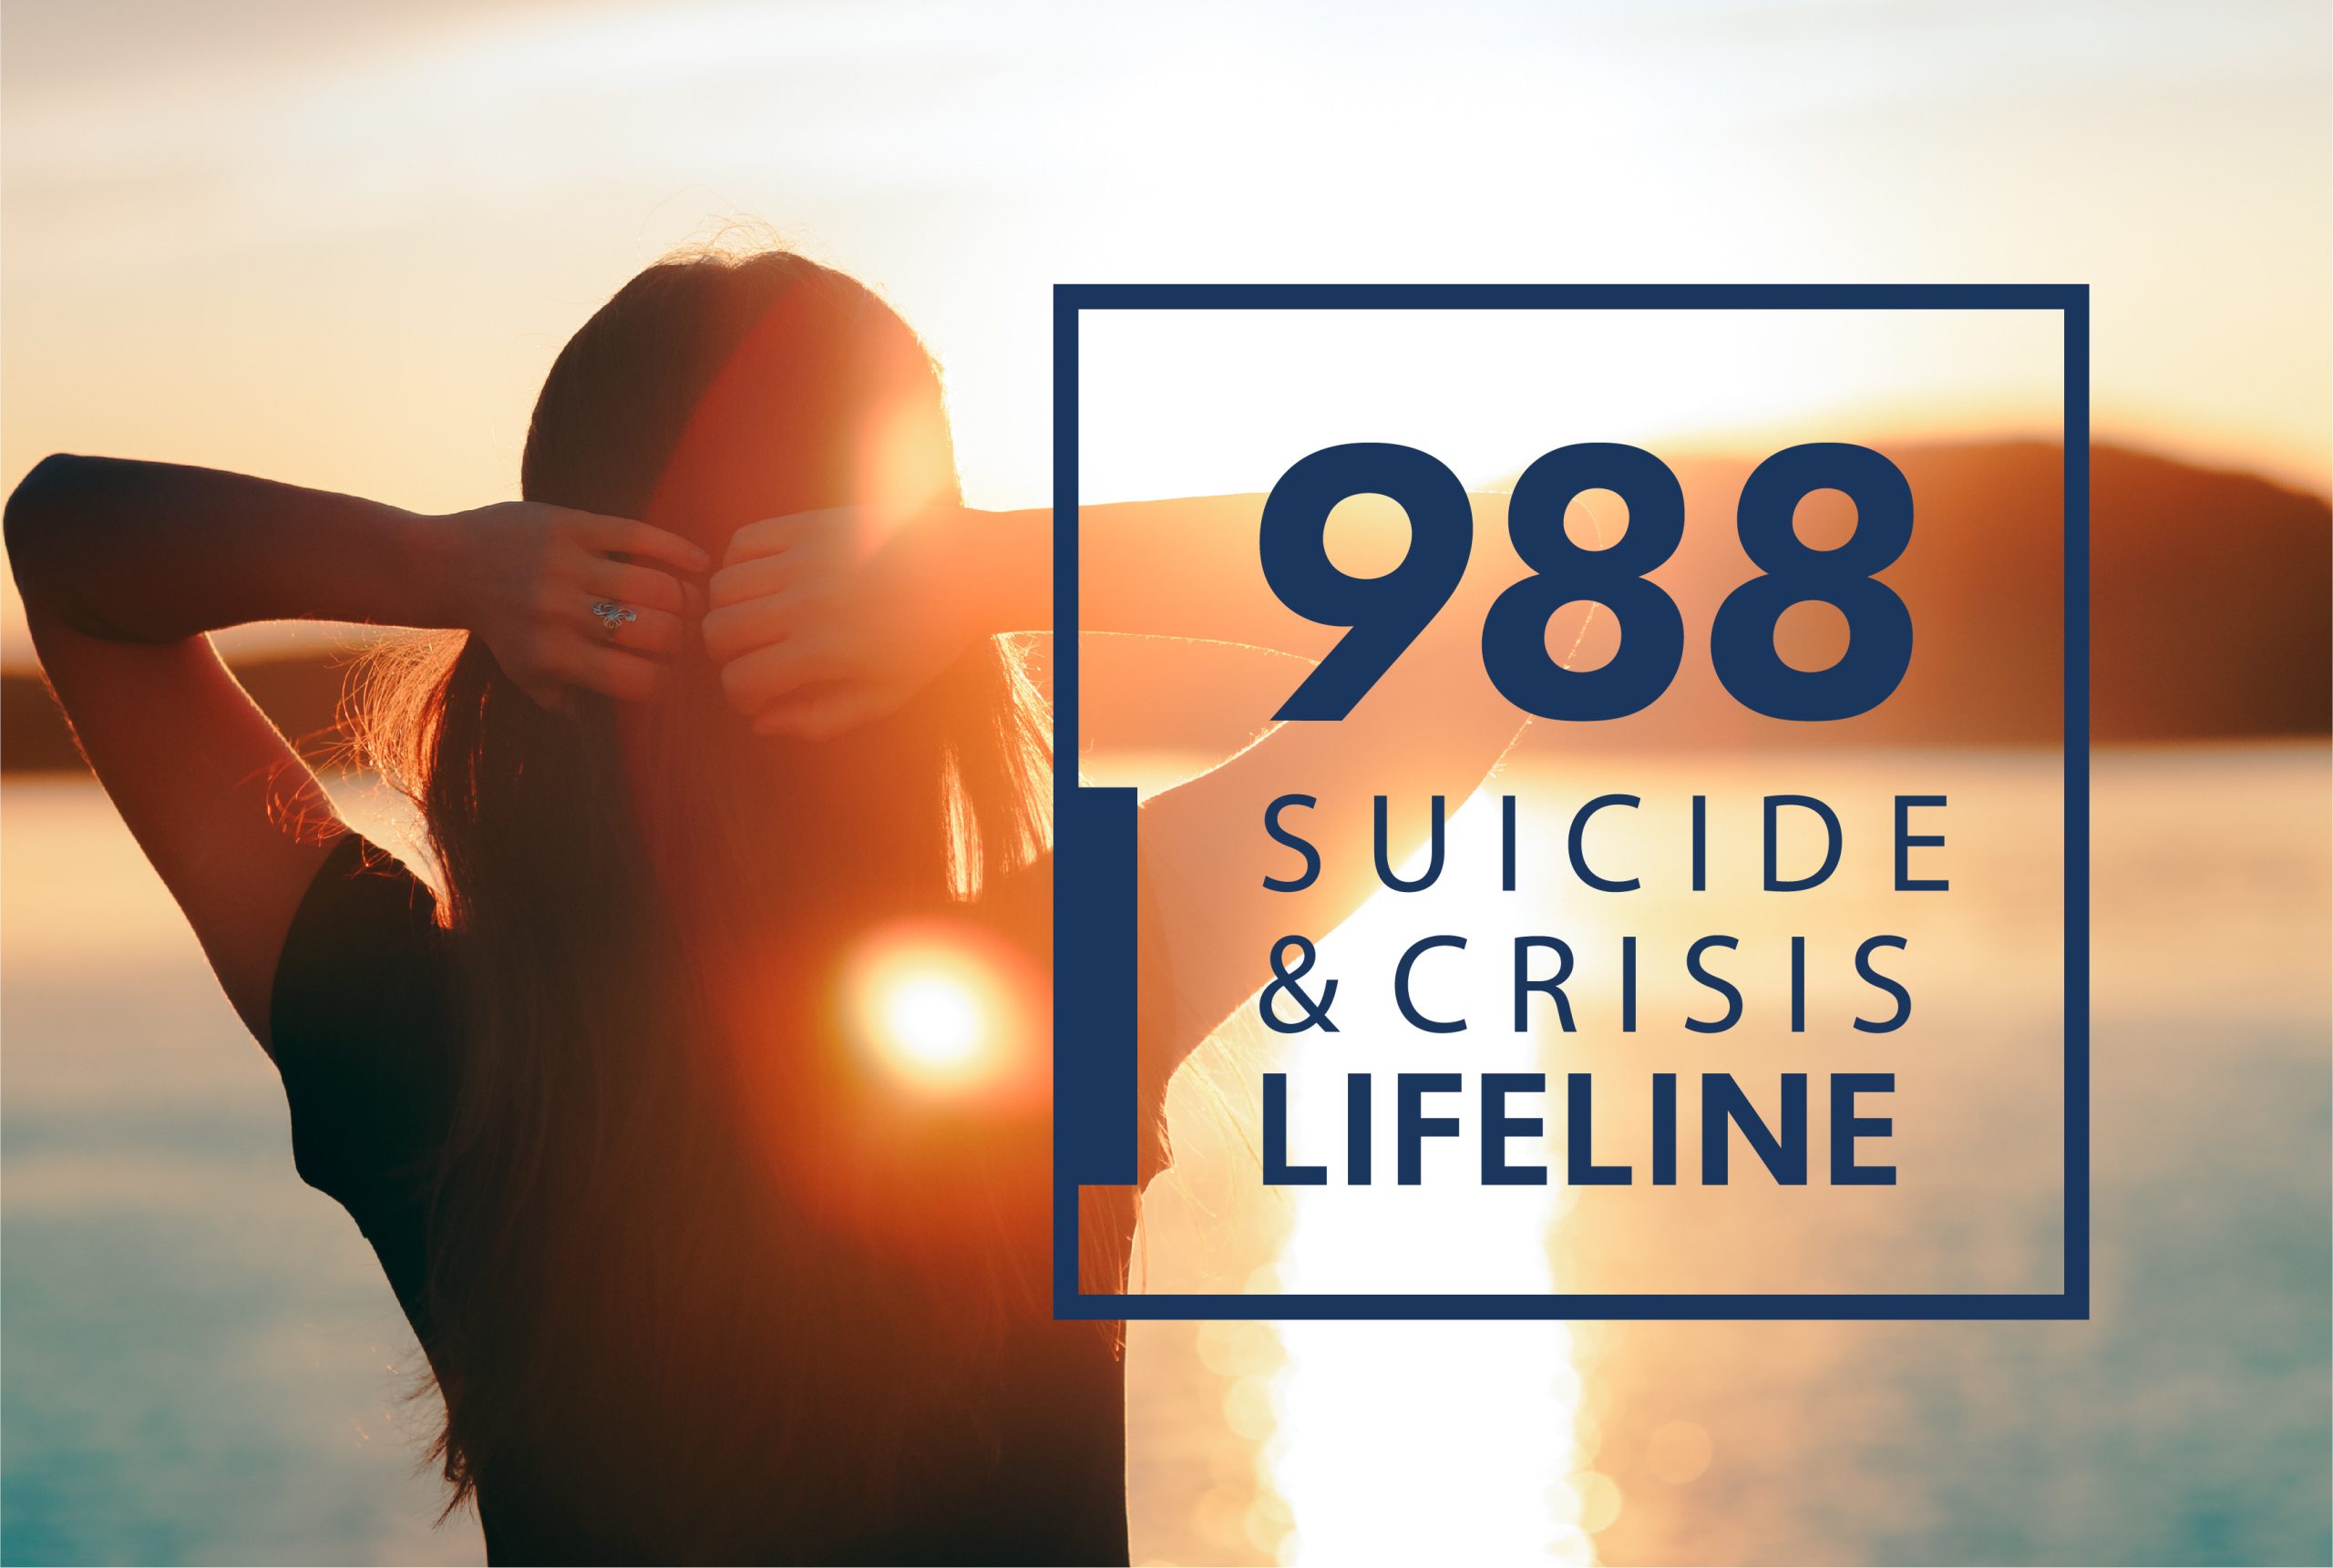 988 suicide and crisis lifeline. Person looking into horizon.